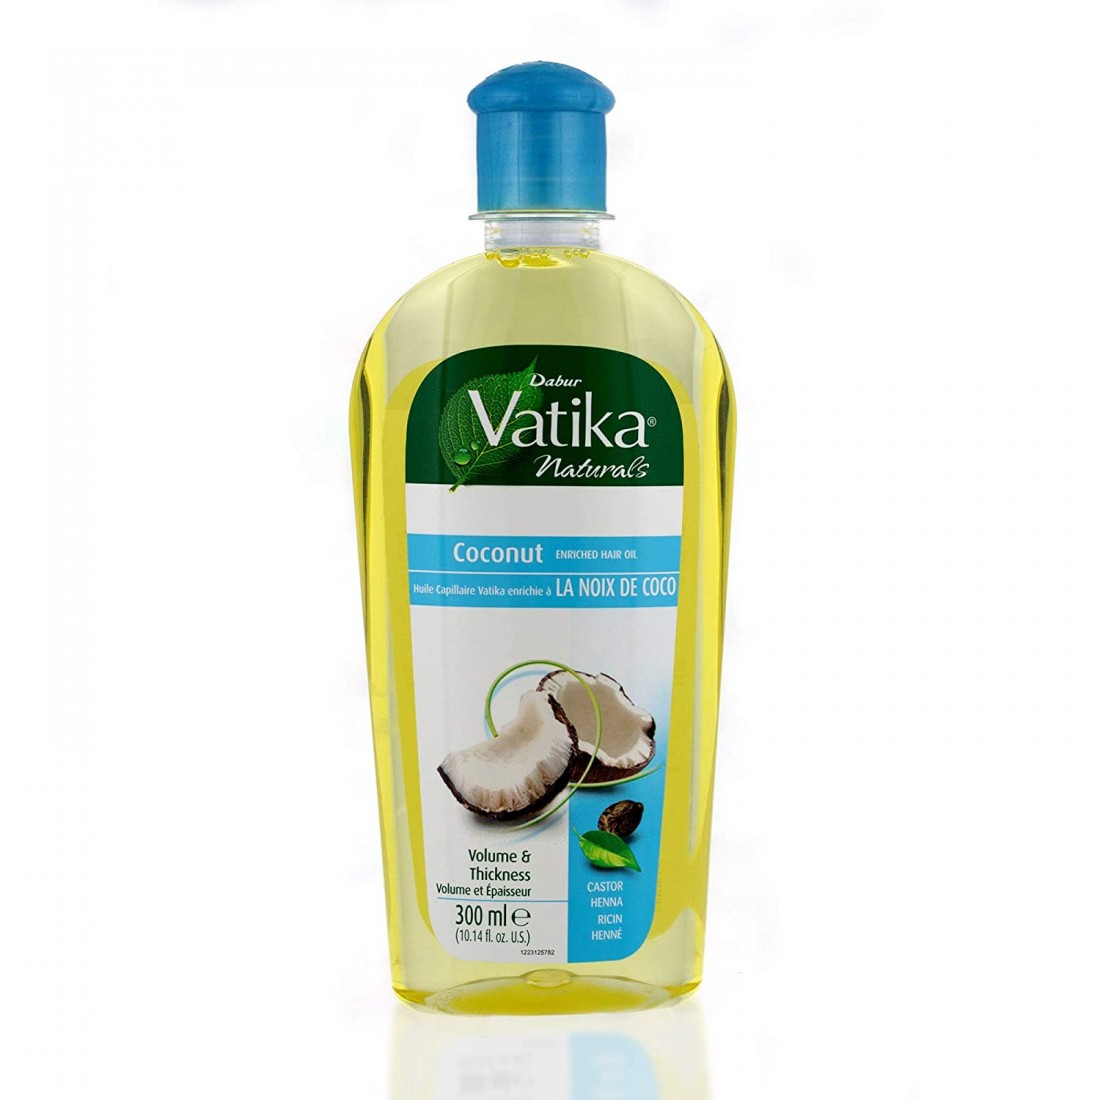 Vatika Coconut hair oil 300ml Barbados